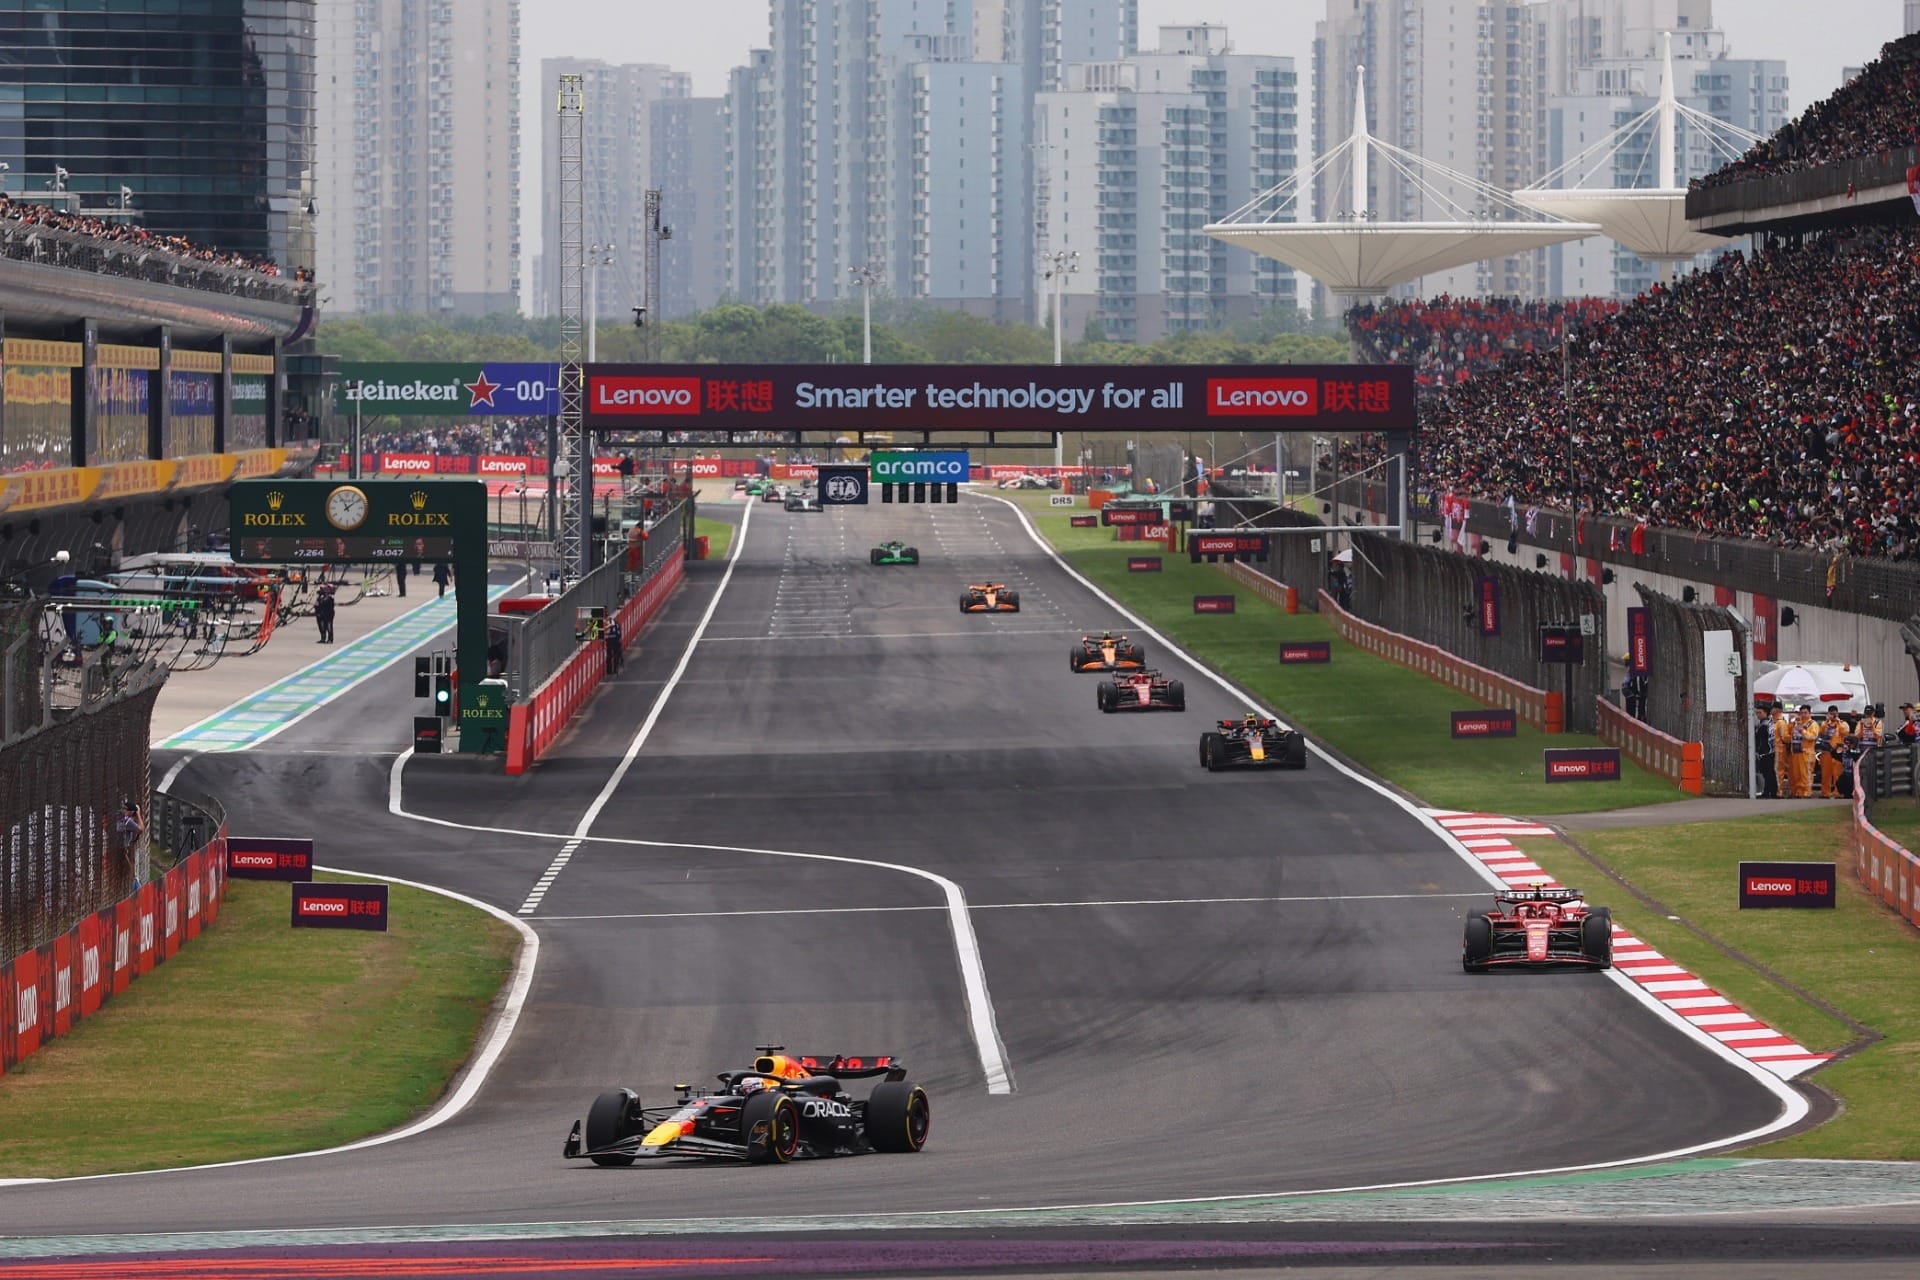 Max Verstappen supera problema e vence corrida sprint do GP da China